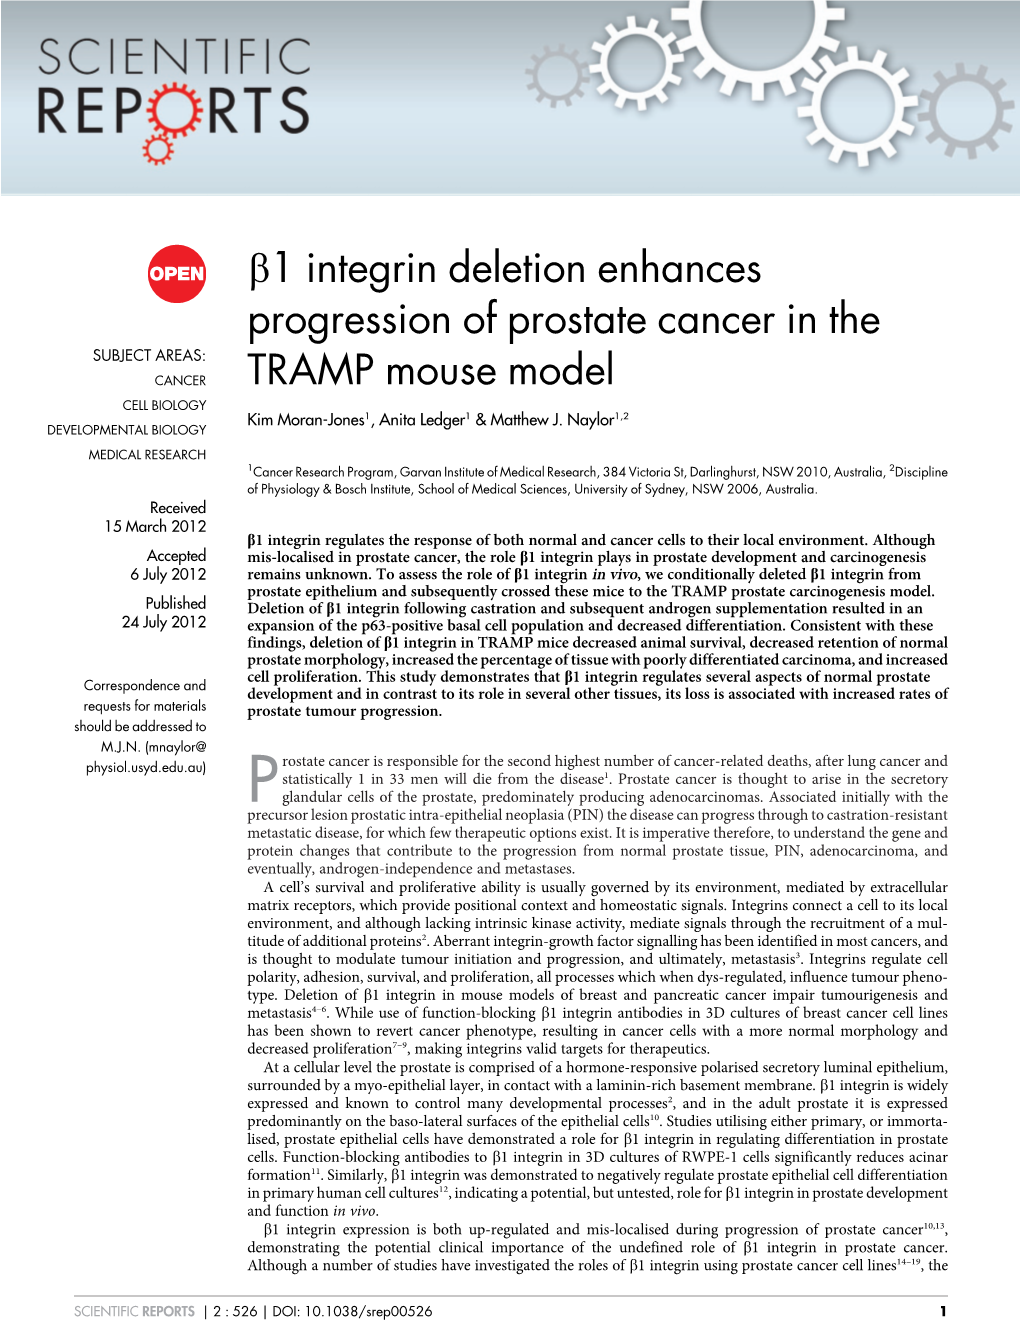 B1 Integrin Deletion Enhances Progression of Prostate Cancer in the TRAMP Mouse Model